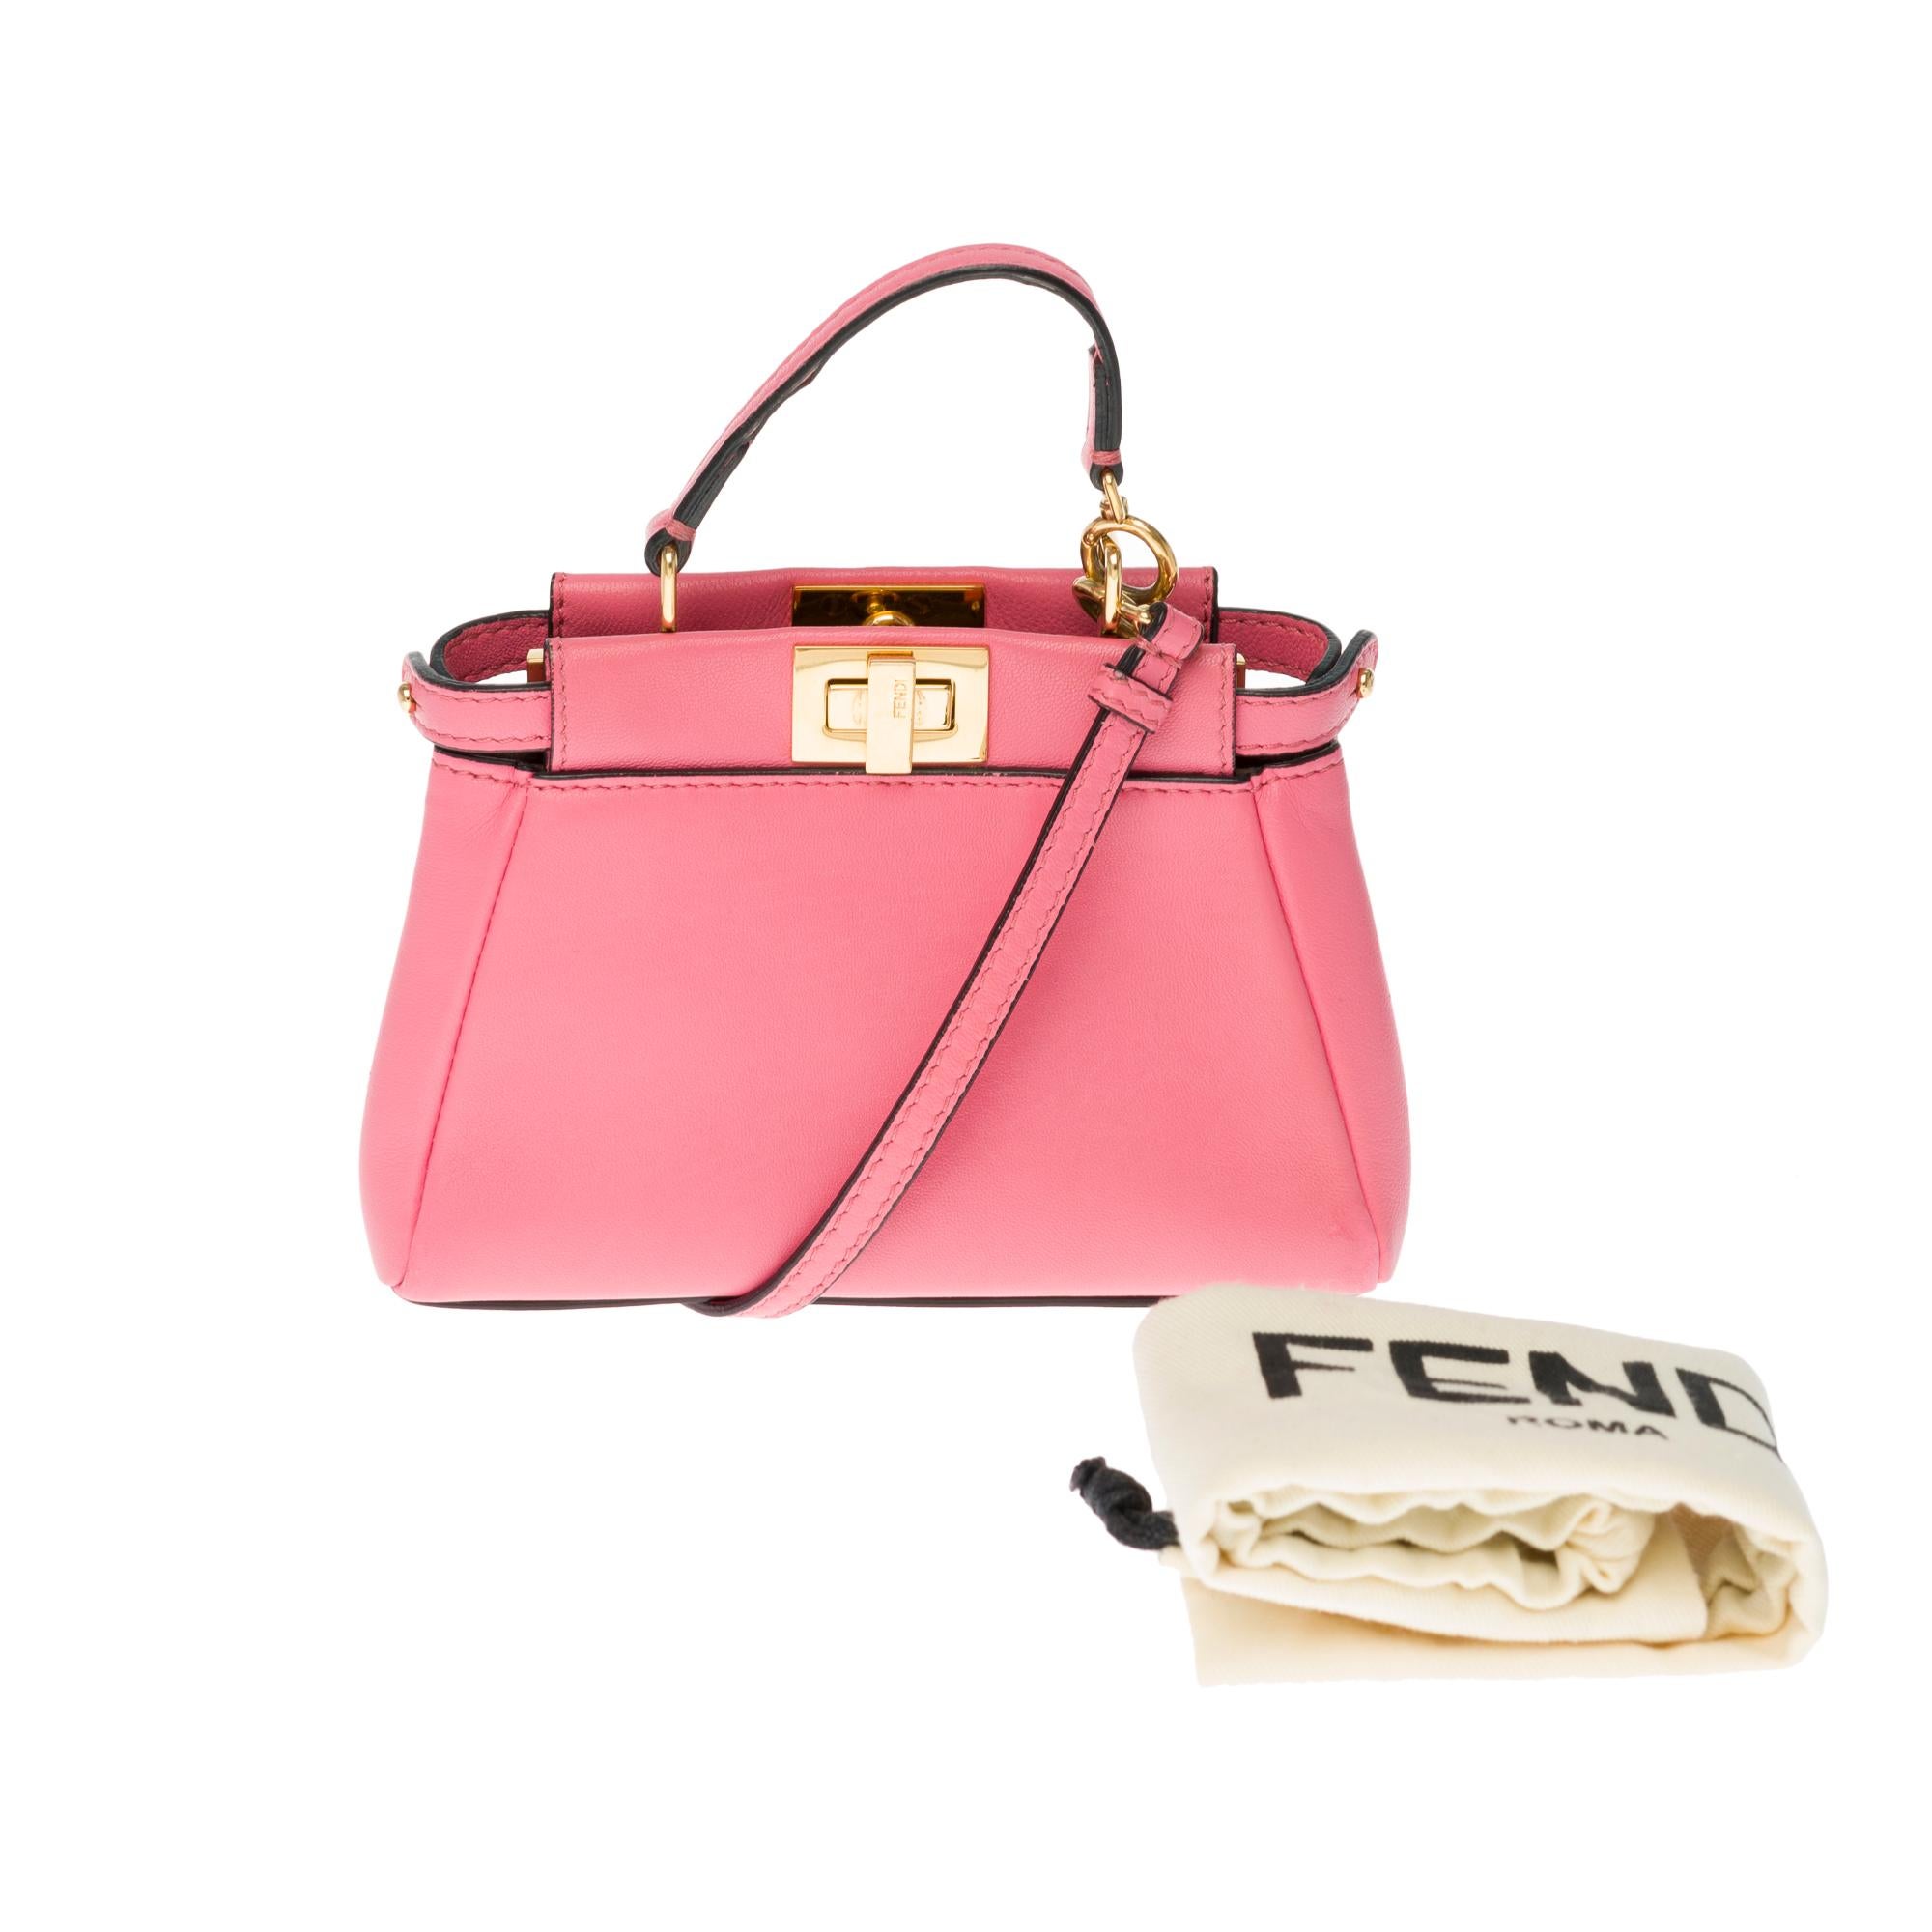 Amazing Fendi Micro Peekaboo shoulder bag in pink leather and gold hardware  6